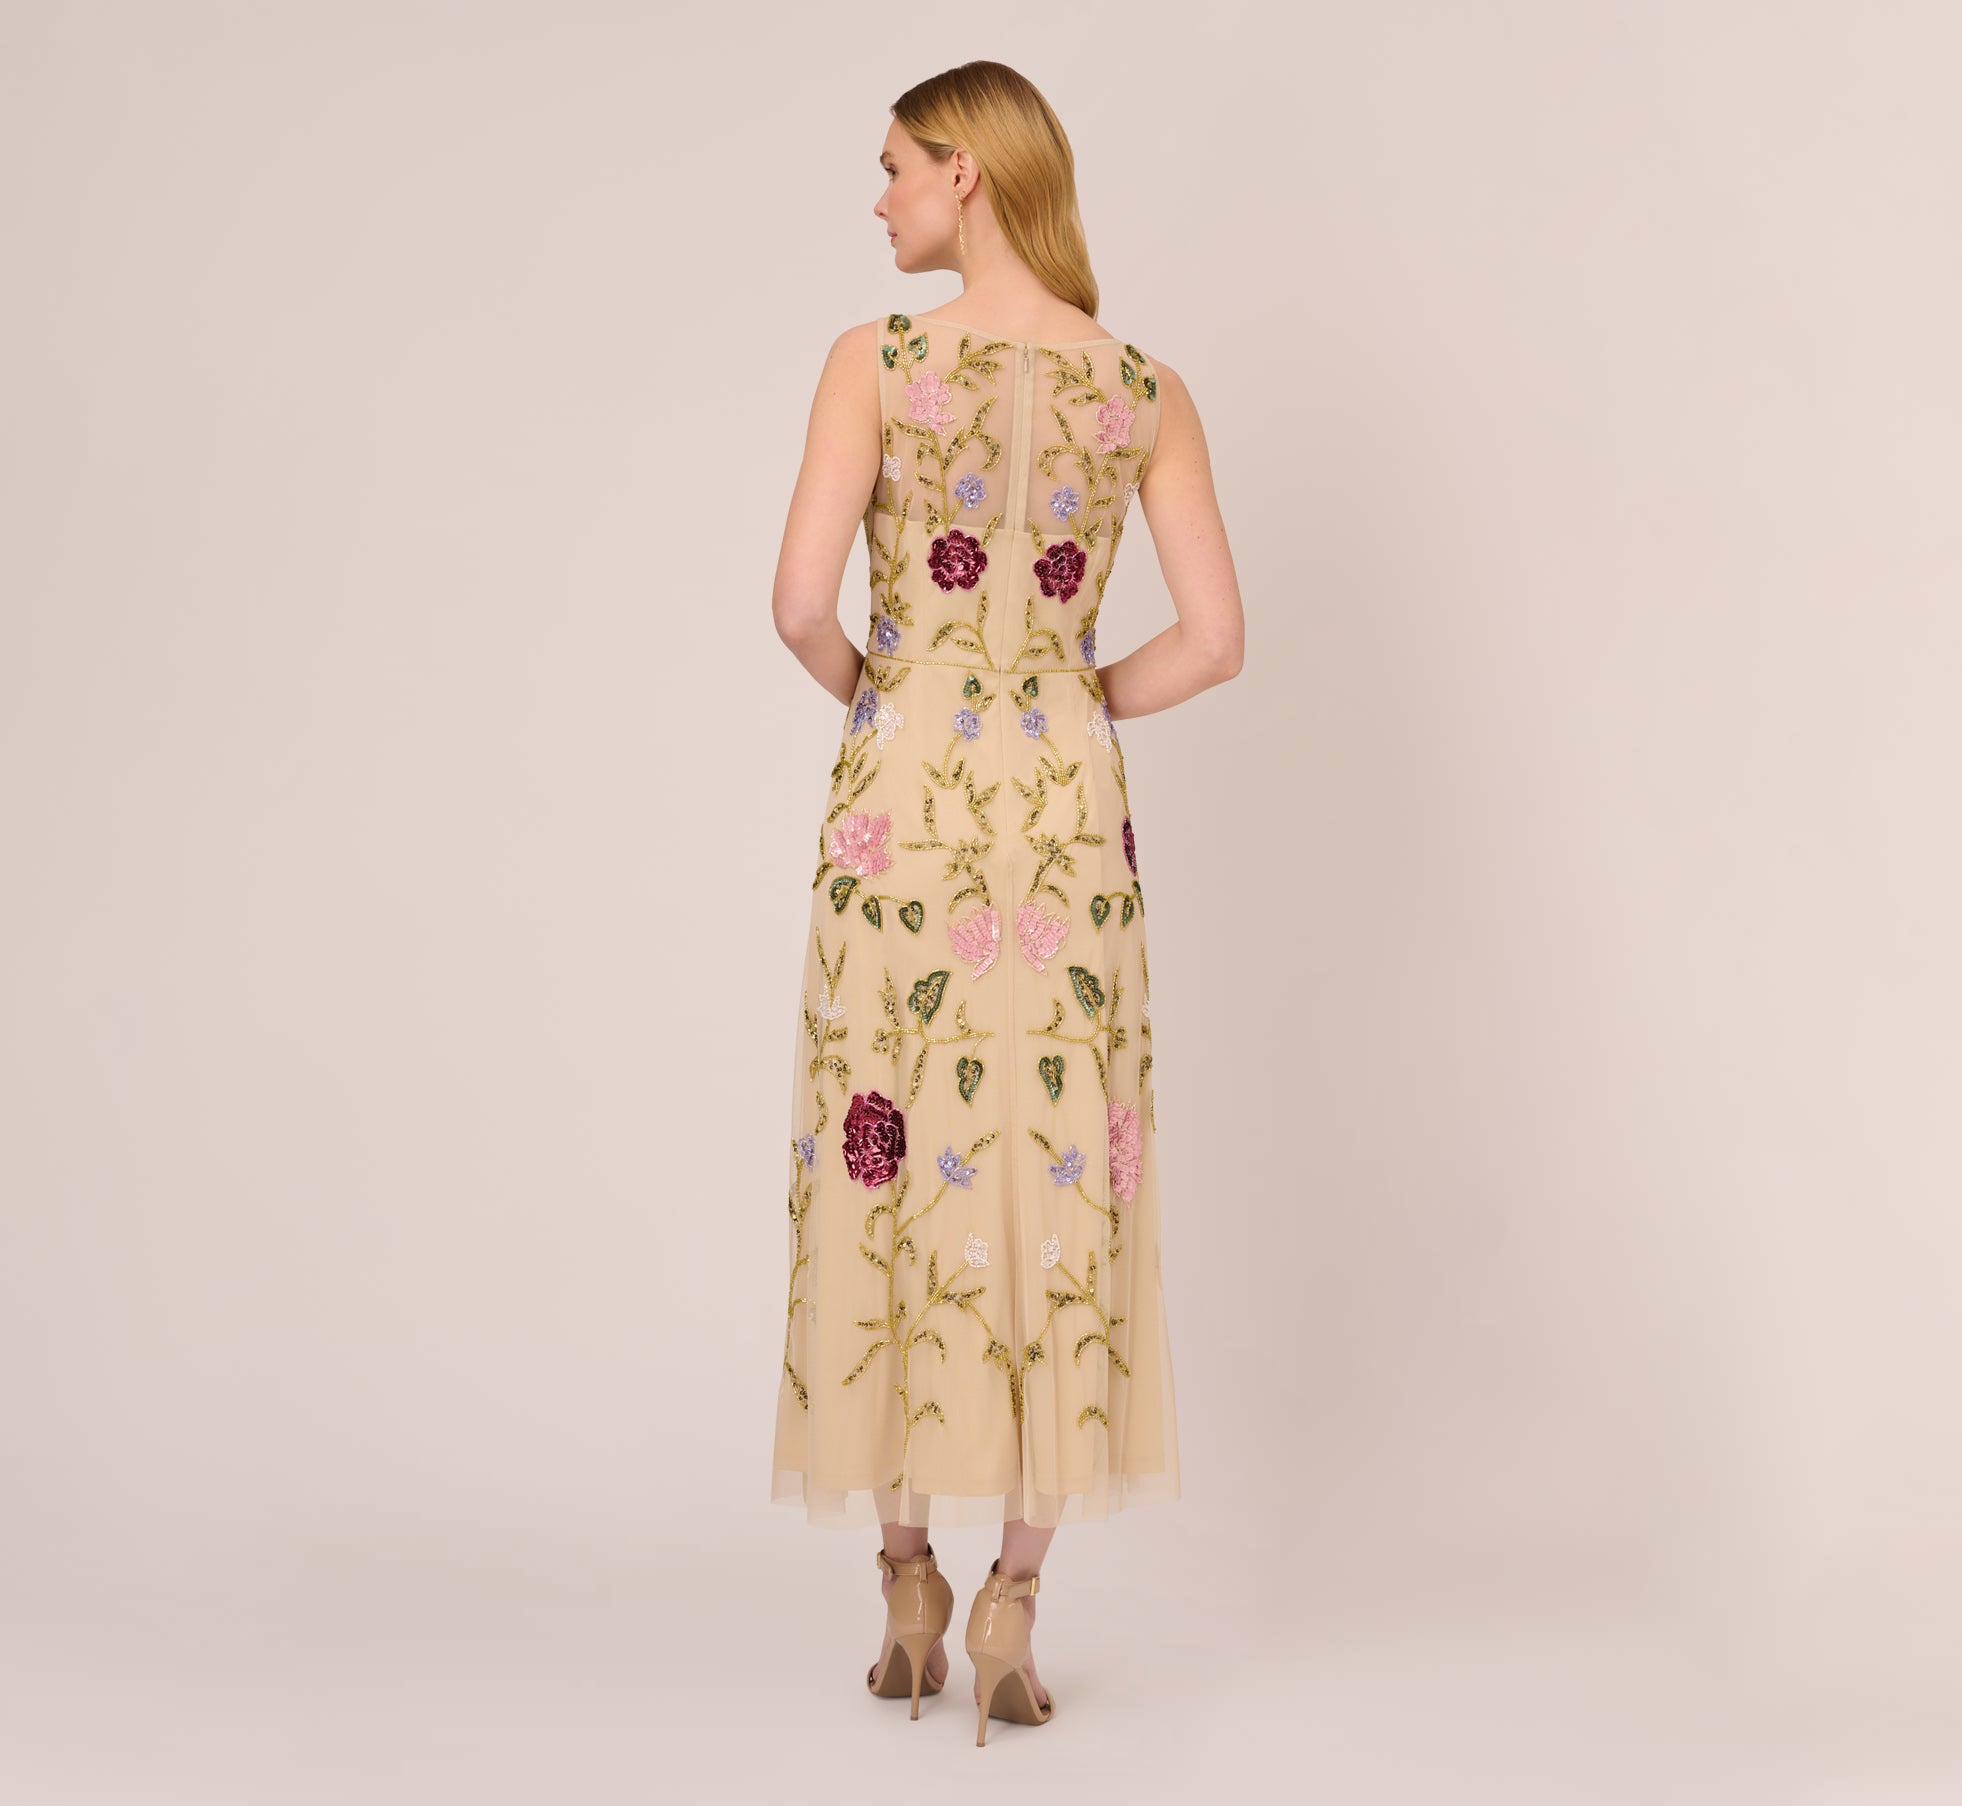 Female Summer Floral Chiffon Dress Lady Sweet Belll Sleeve Knee Length Gown  | eBay